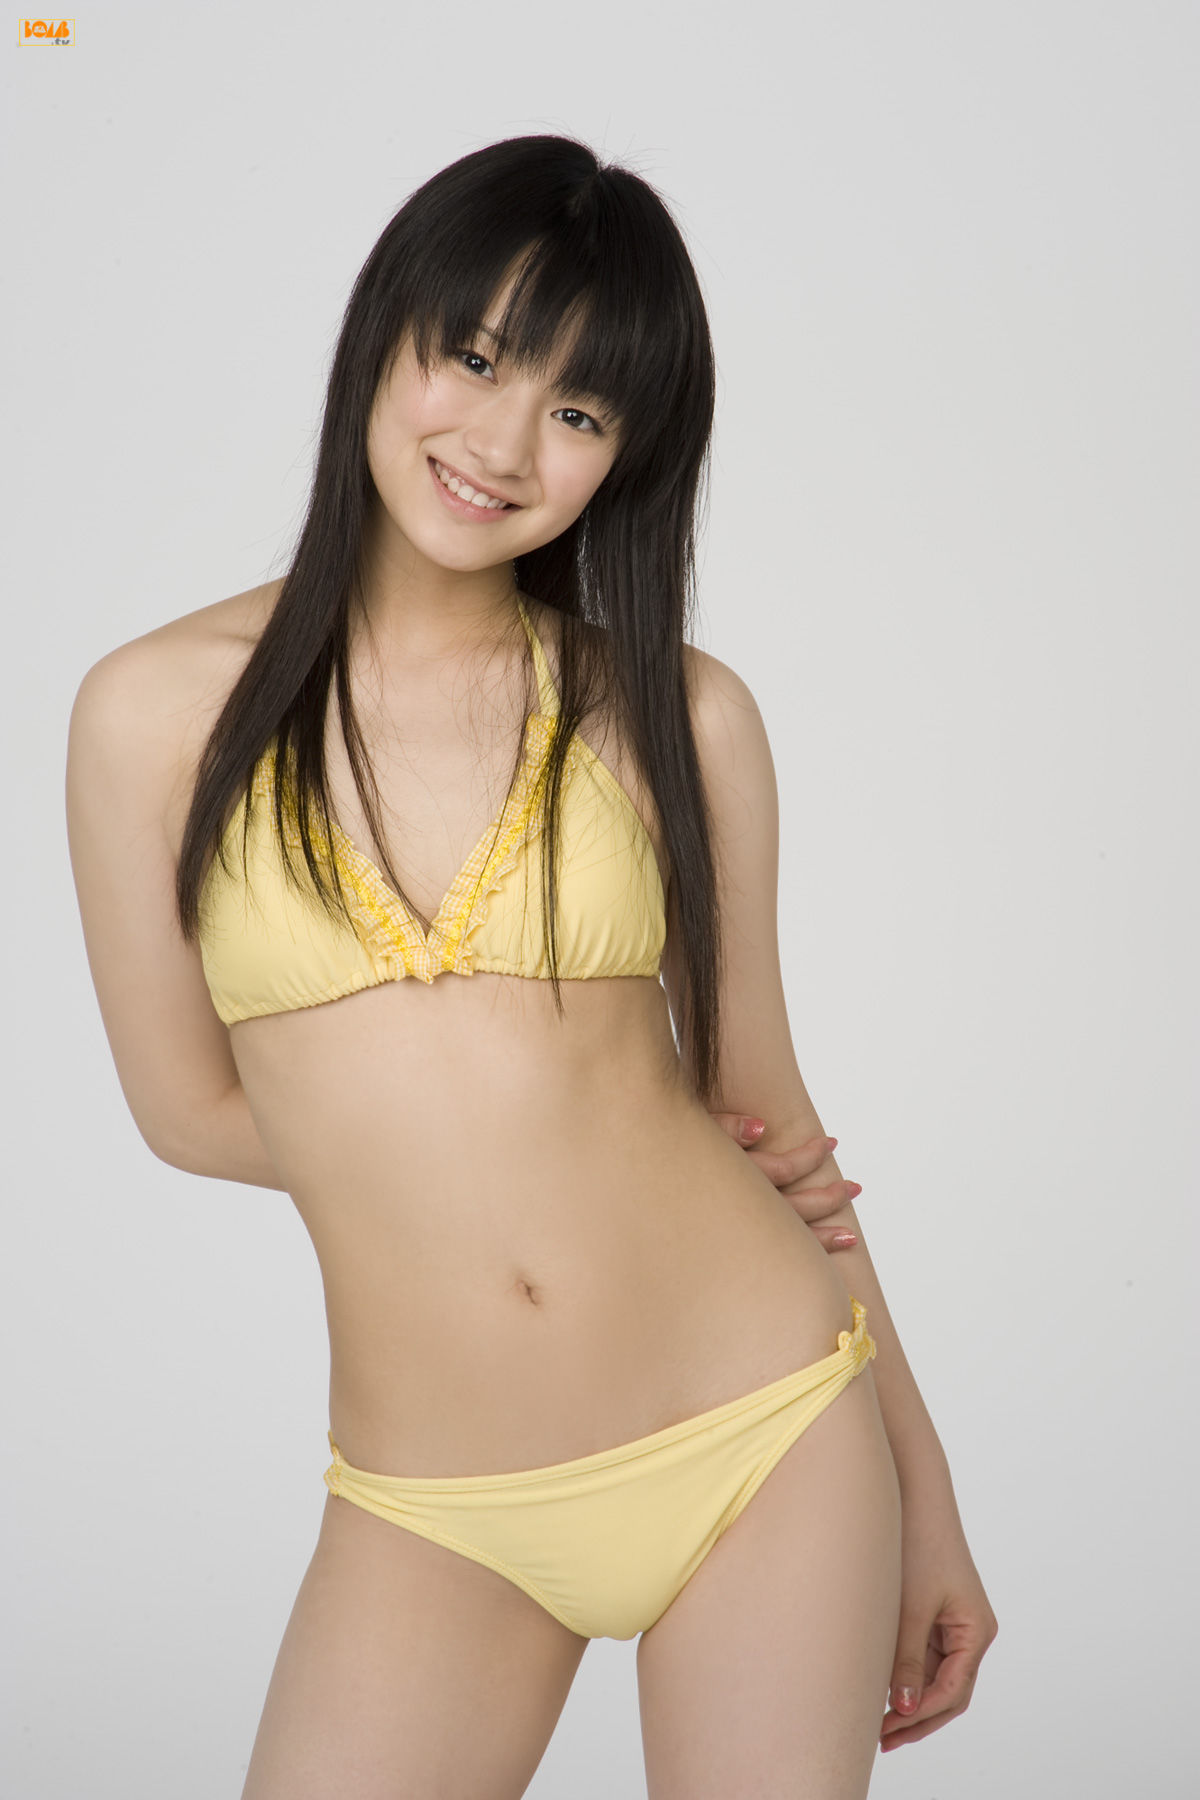 [Bomb.TV] 日本女子偶像组合 Idoling 2008-06